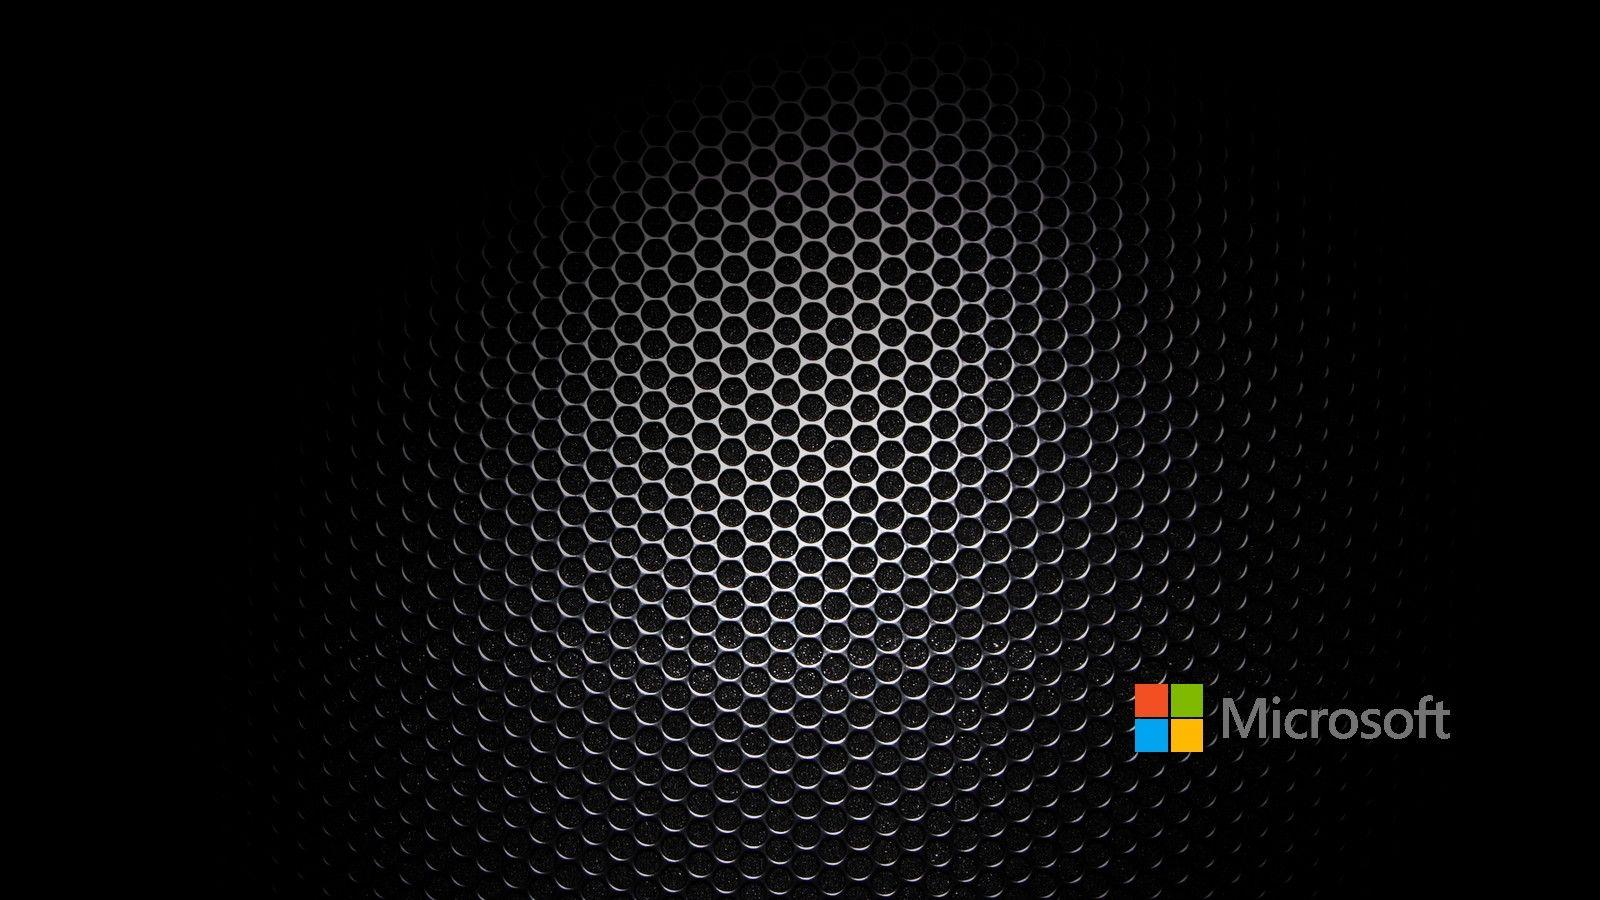 Microsoft Wallpapers Desktops 28428 HD Pictures